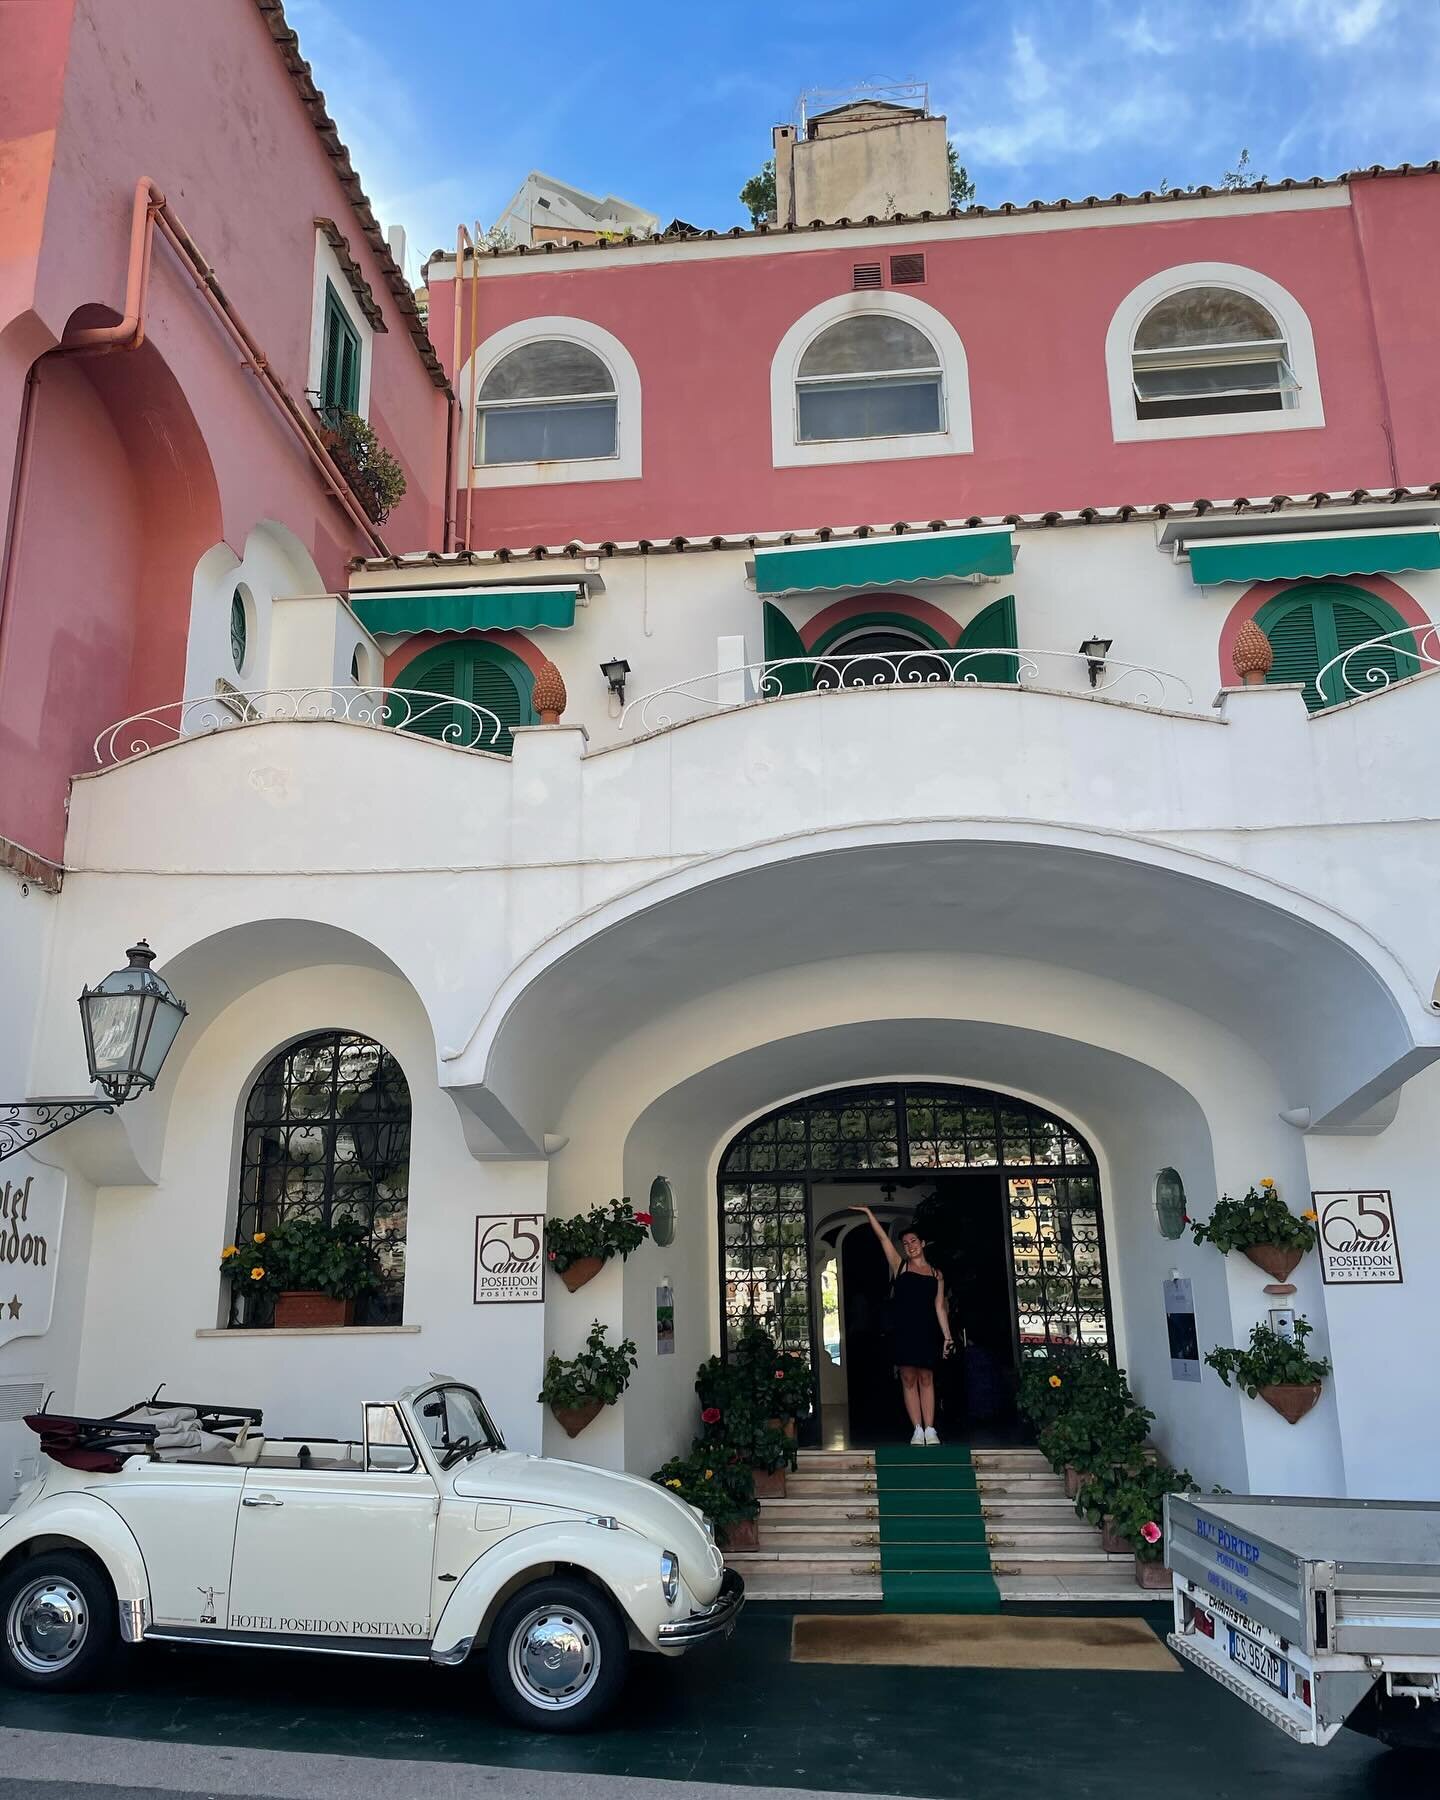 happy reopening day to the most magical hotel on the amalfi coast 💚

@hotelposeidonpositano